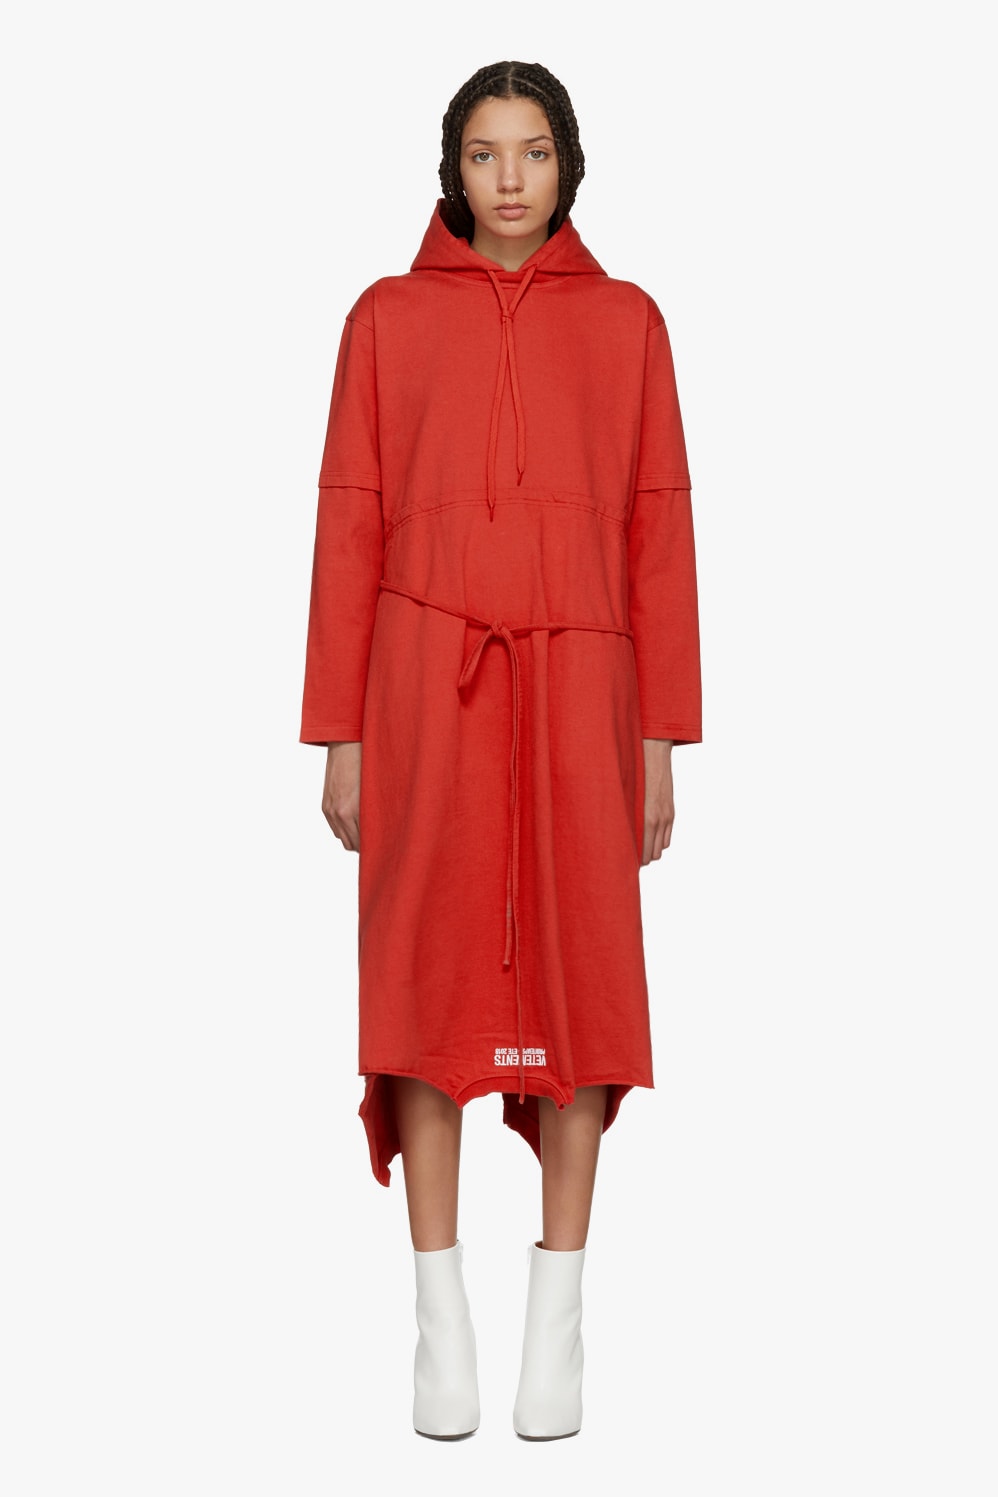 Vetements Spring/Summer Collection Drop Hoodie Dress